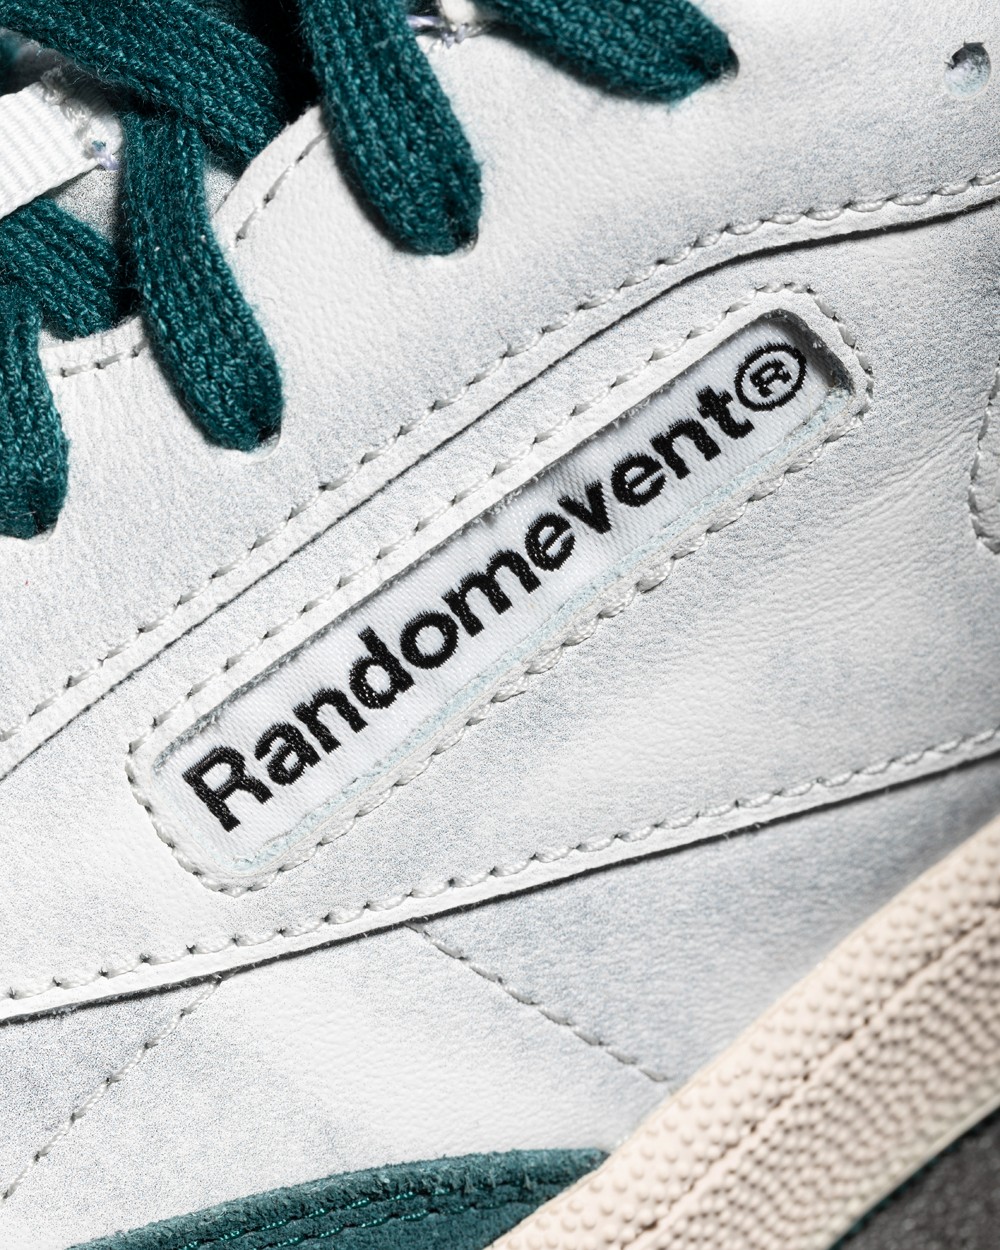 Reebok,Randomevent  卷起来！复古跑鞋都开始用「硬核科技」了！超稀有联名下周发售！